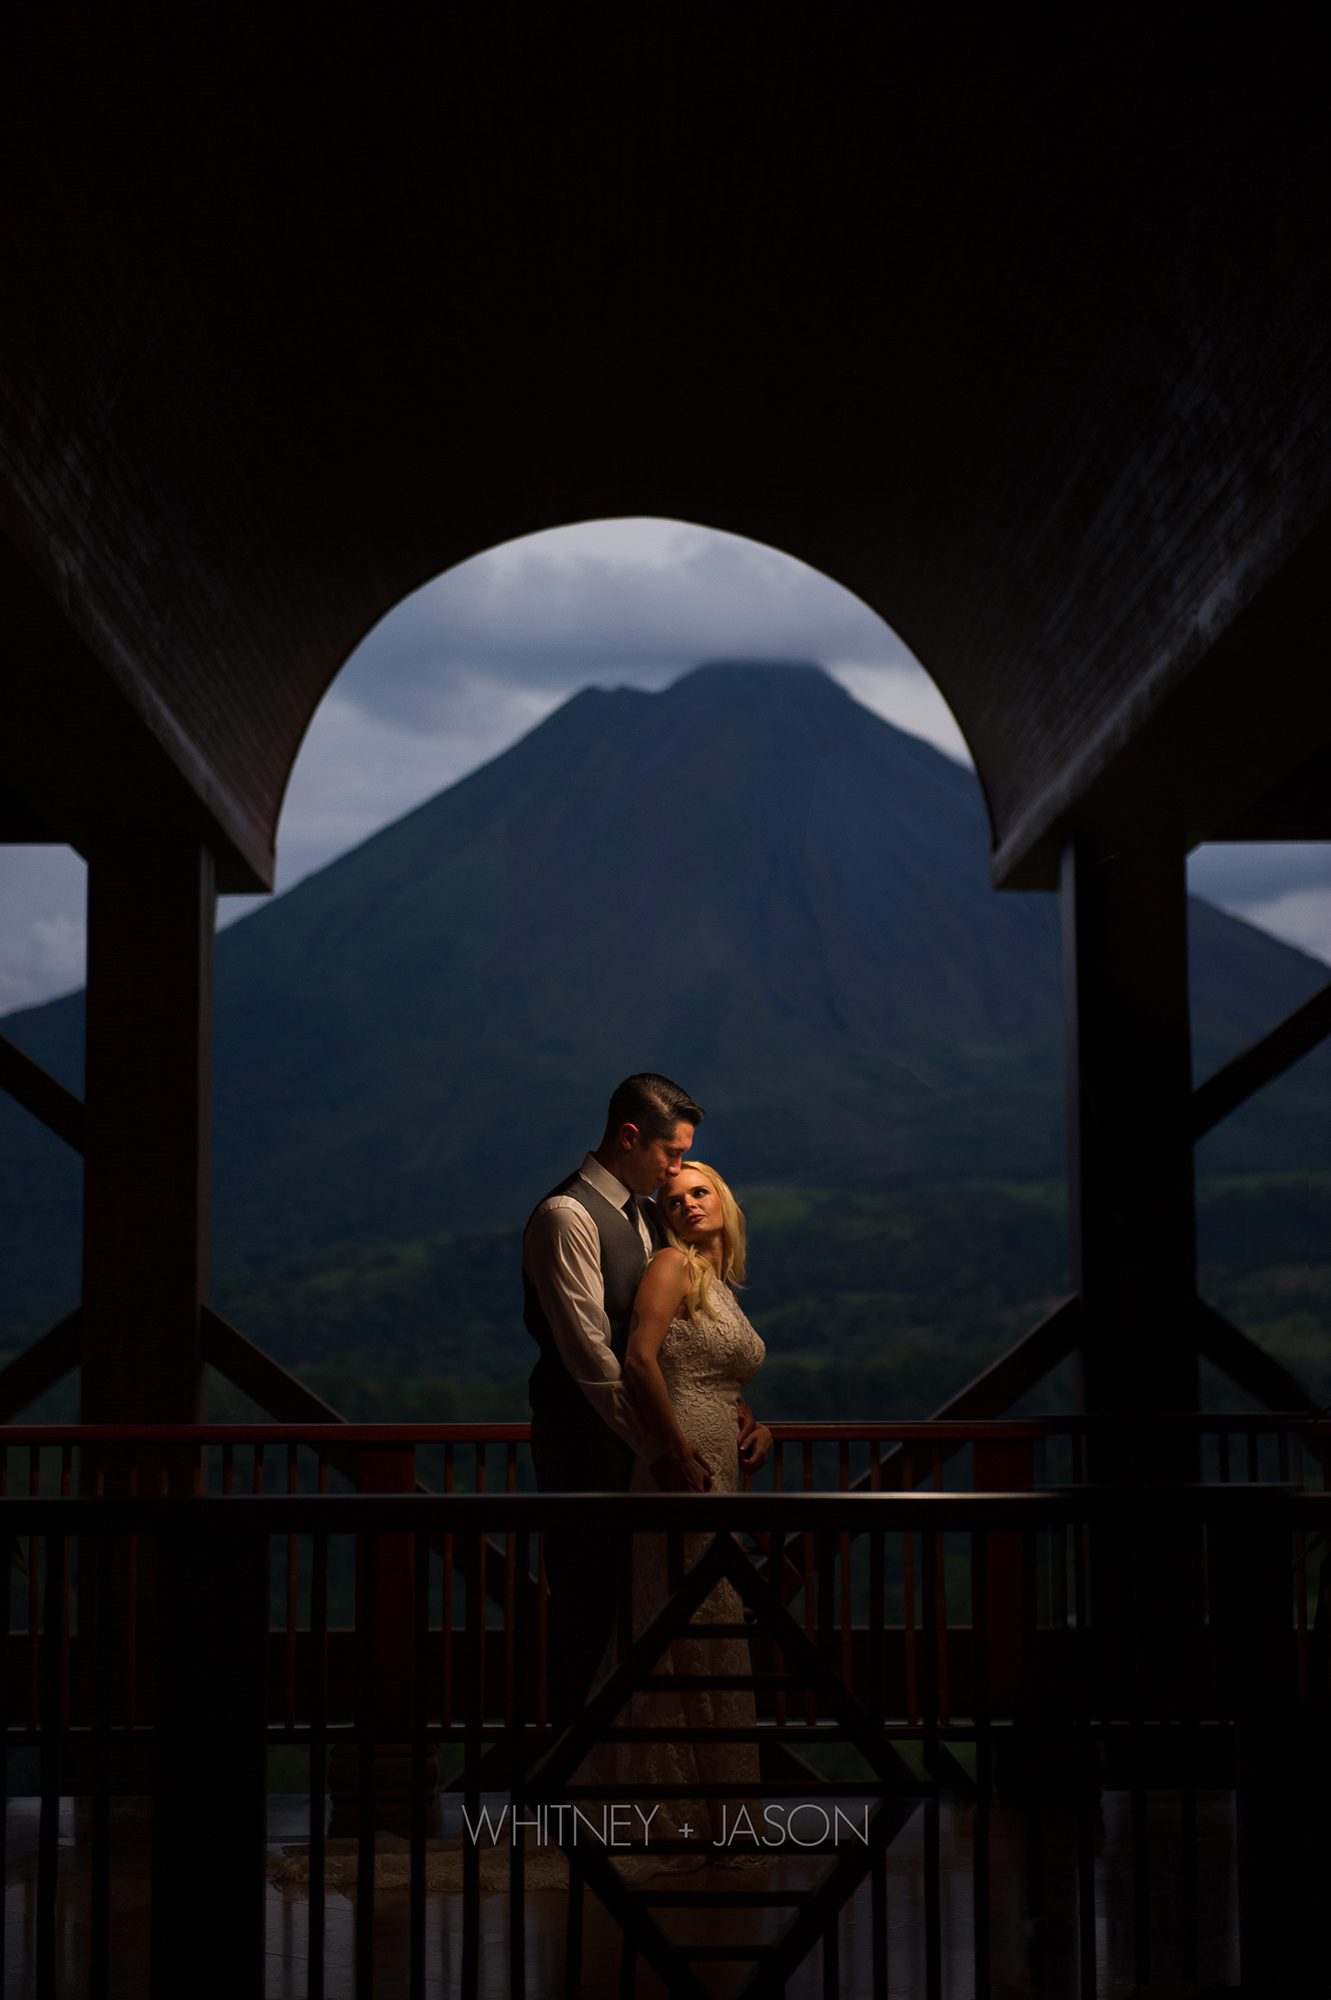 Costa Rica Wedding Photography - AJH Photography